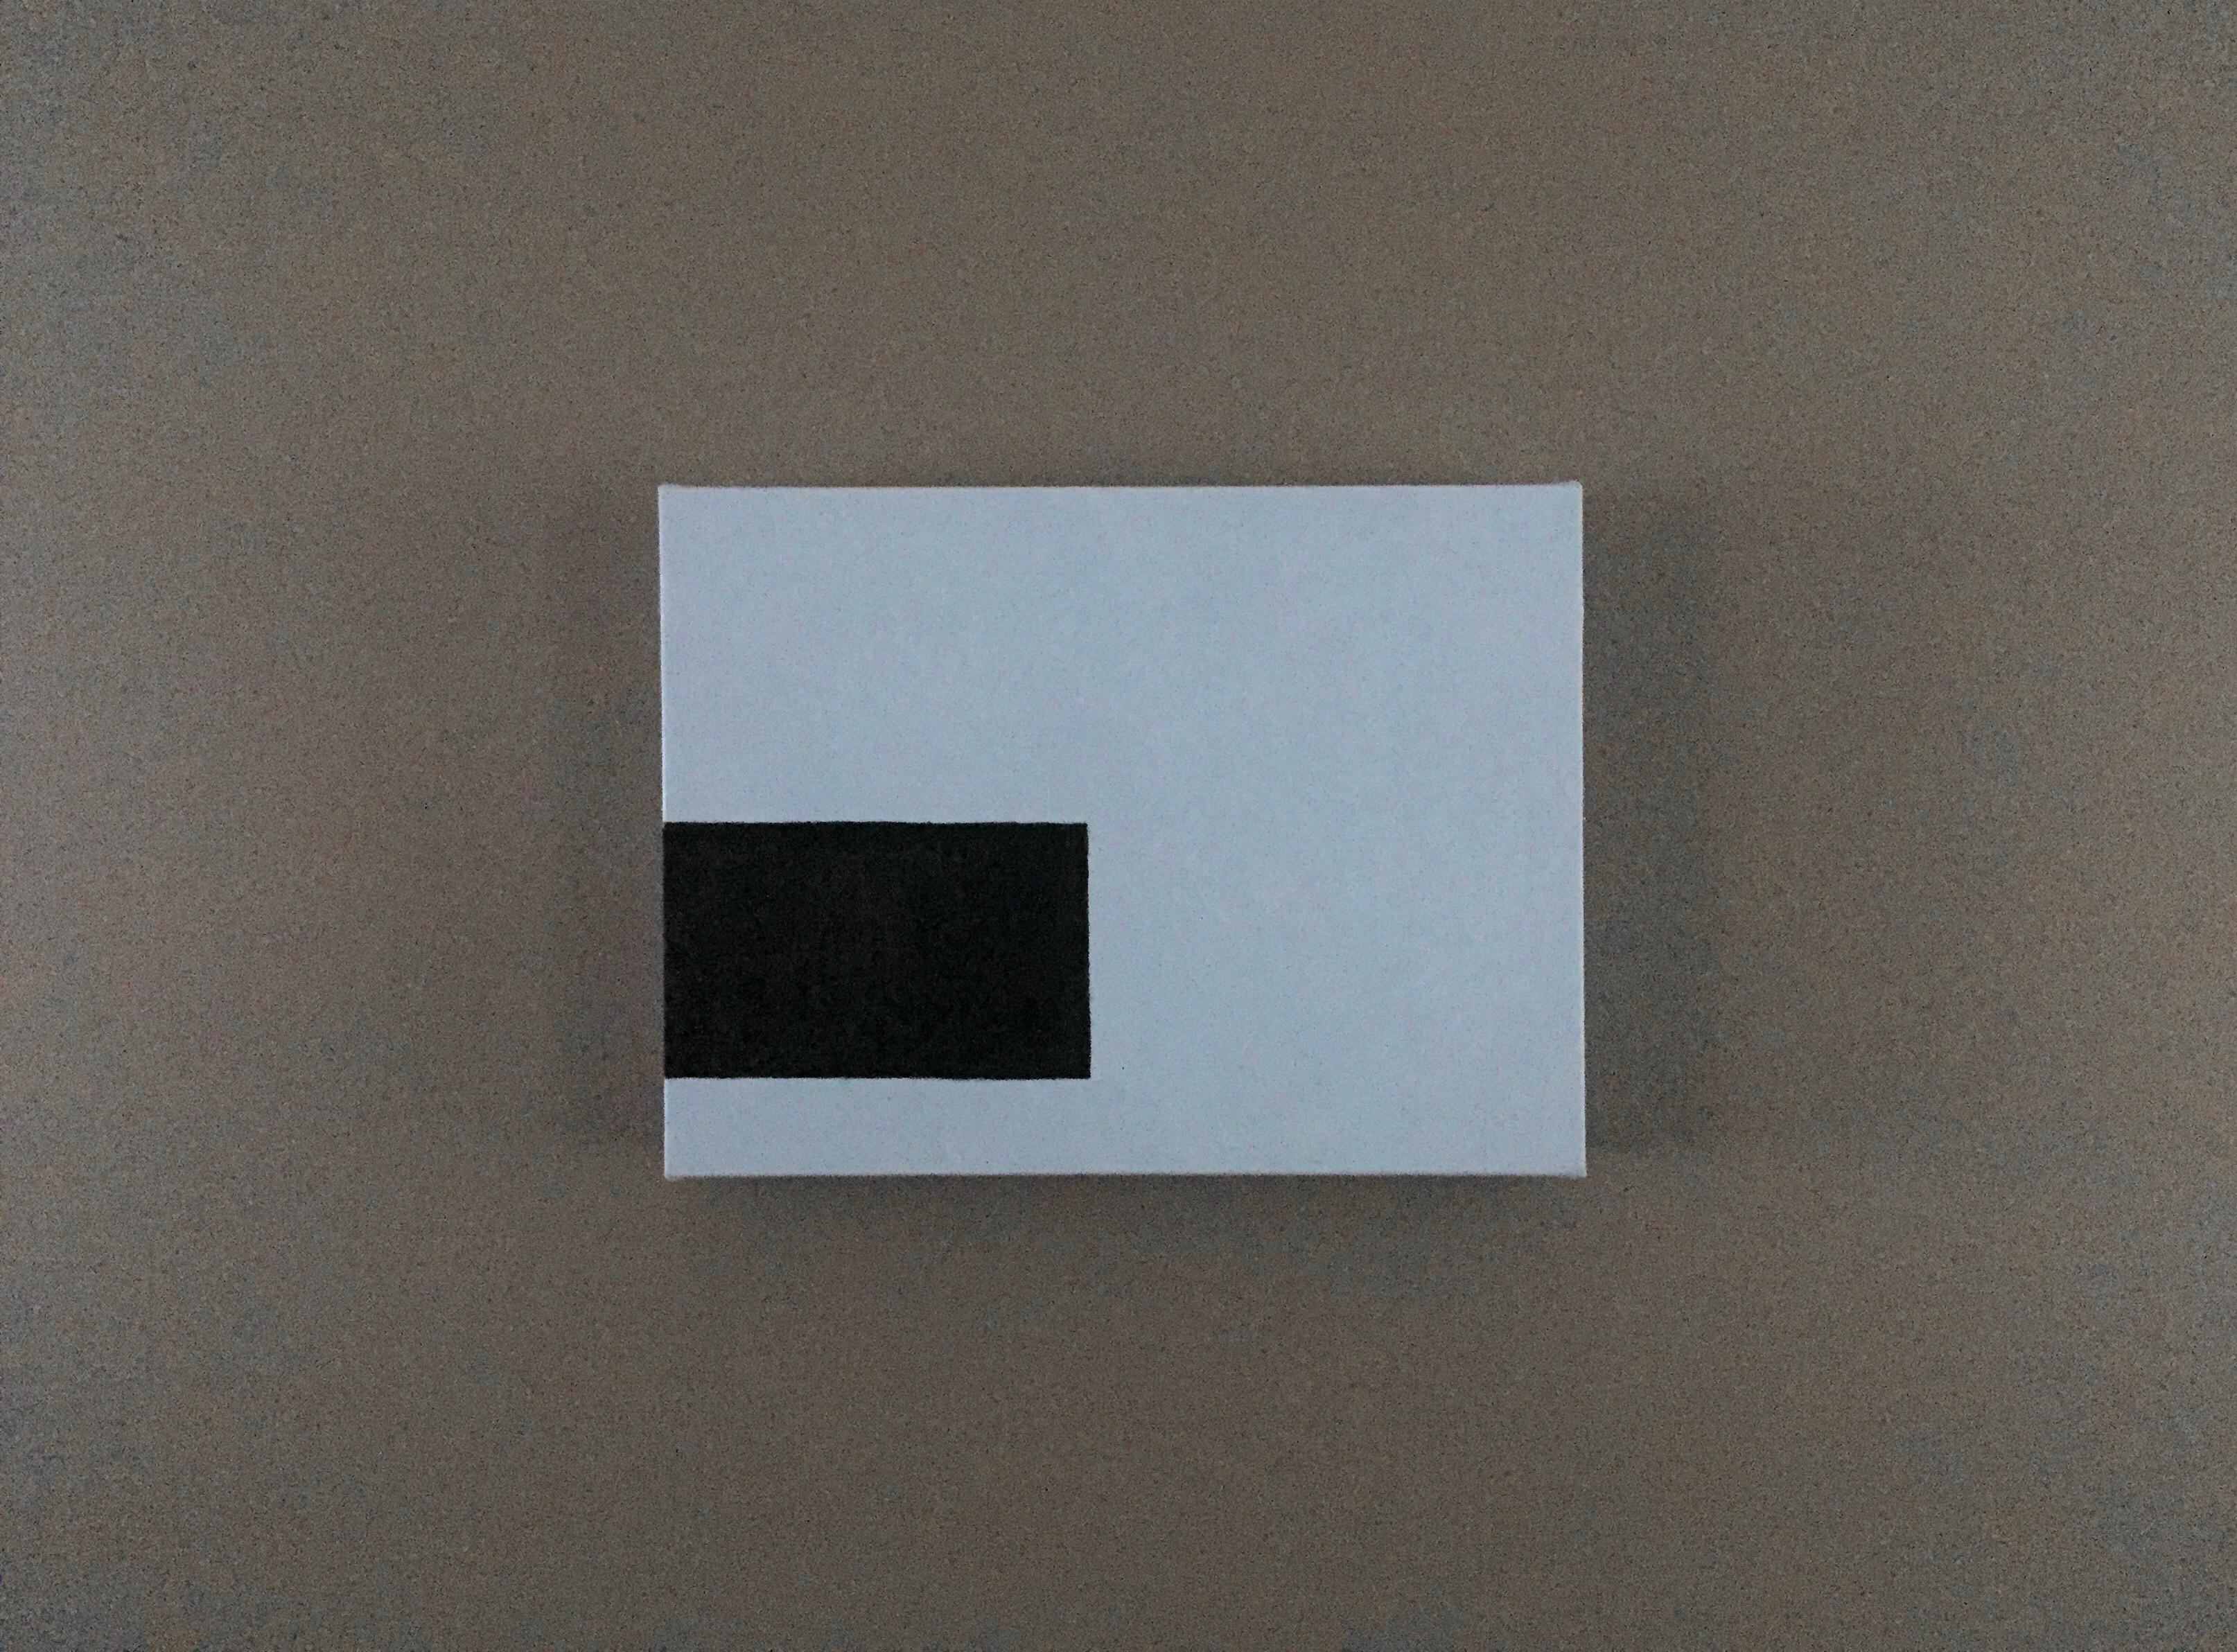 Prada Blau 2 (9 Zoll x 12 Zoll), Minimal, Geometrisch, Schwarz, Blau, Abstraktes Gemälde)